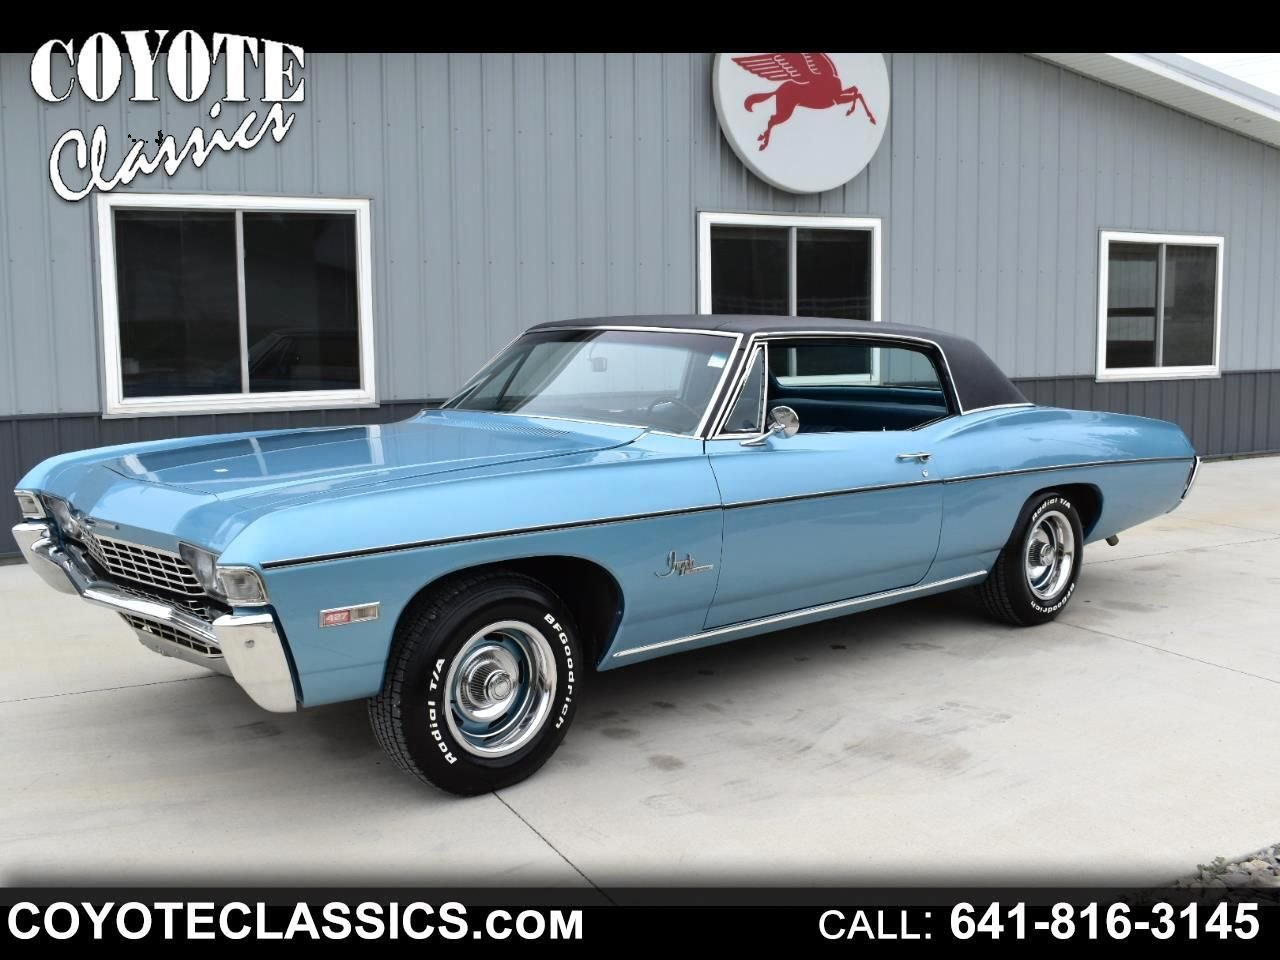 1968 Chevrolet Impala | Coyote Classics